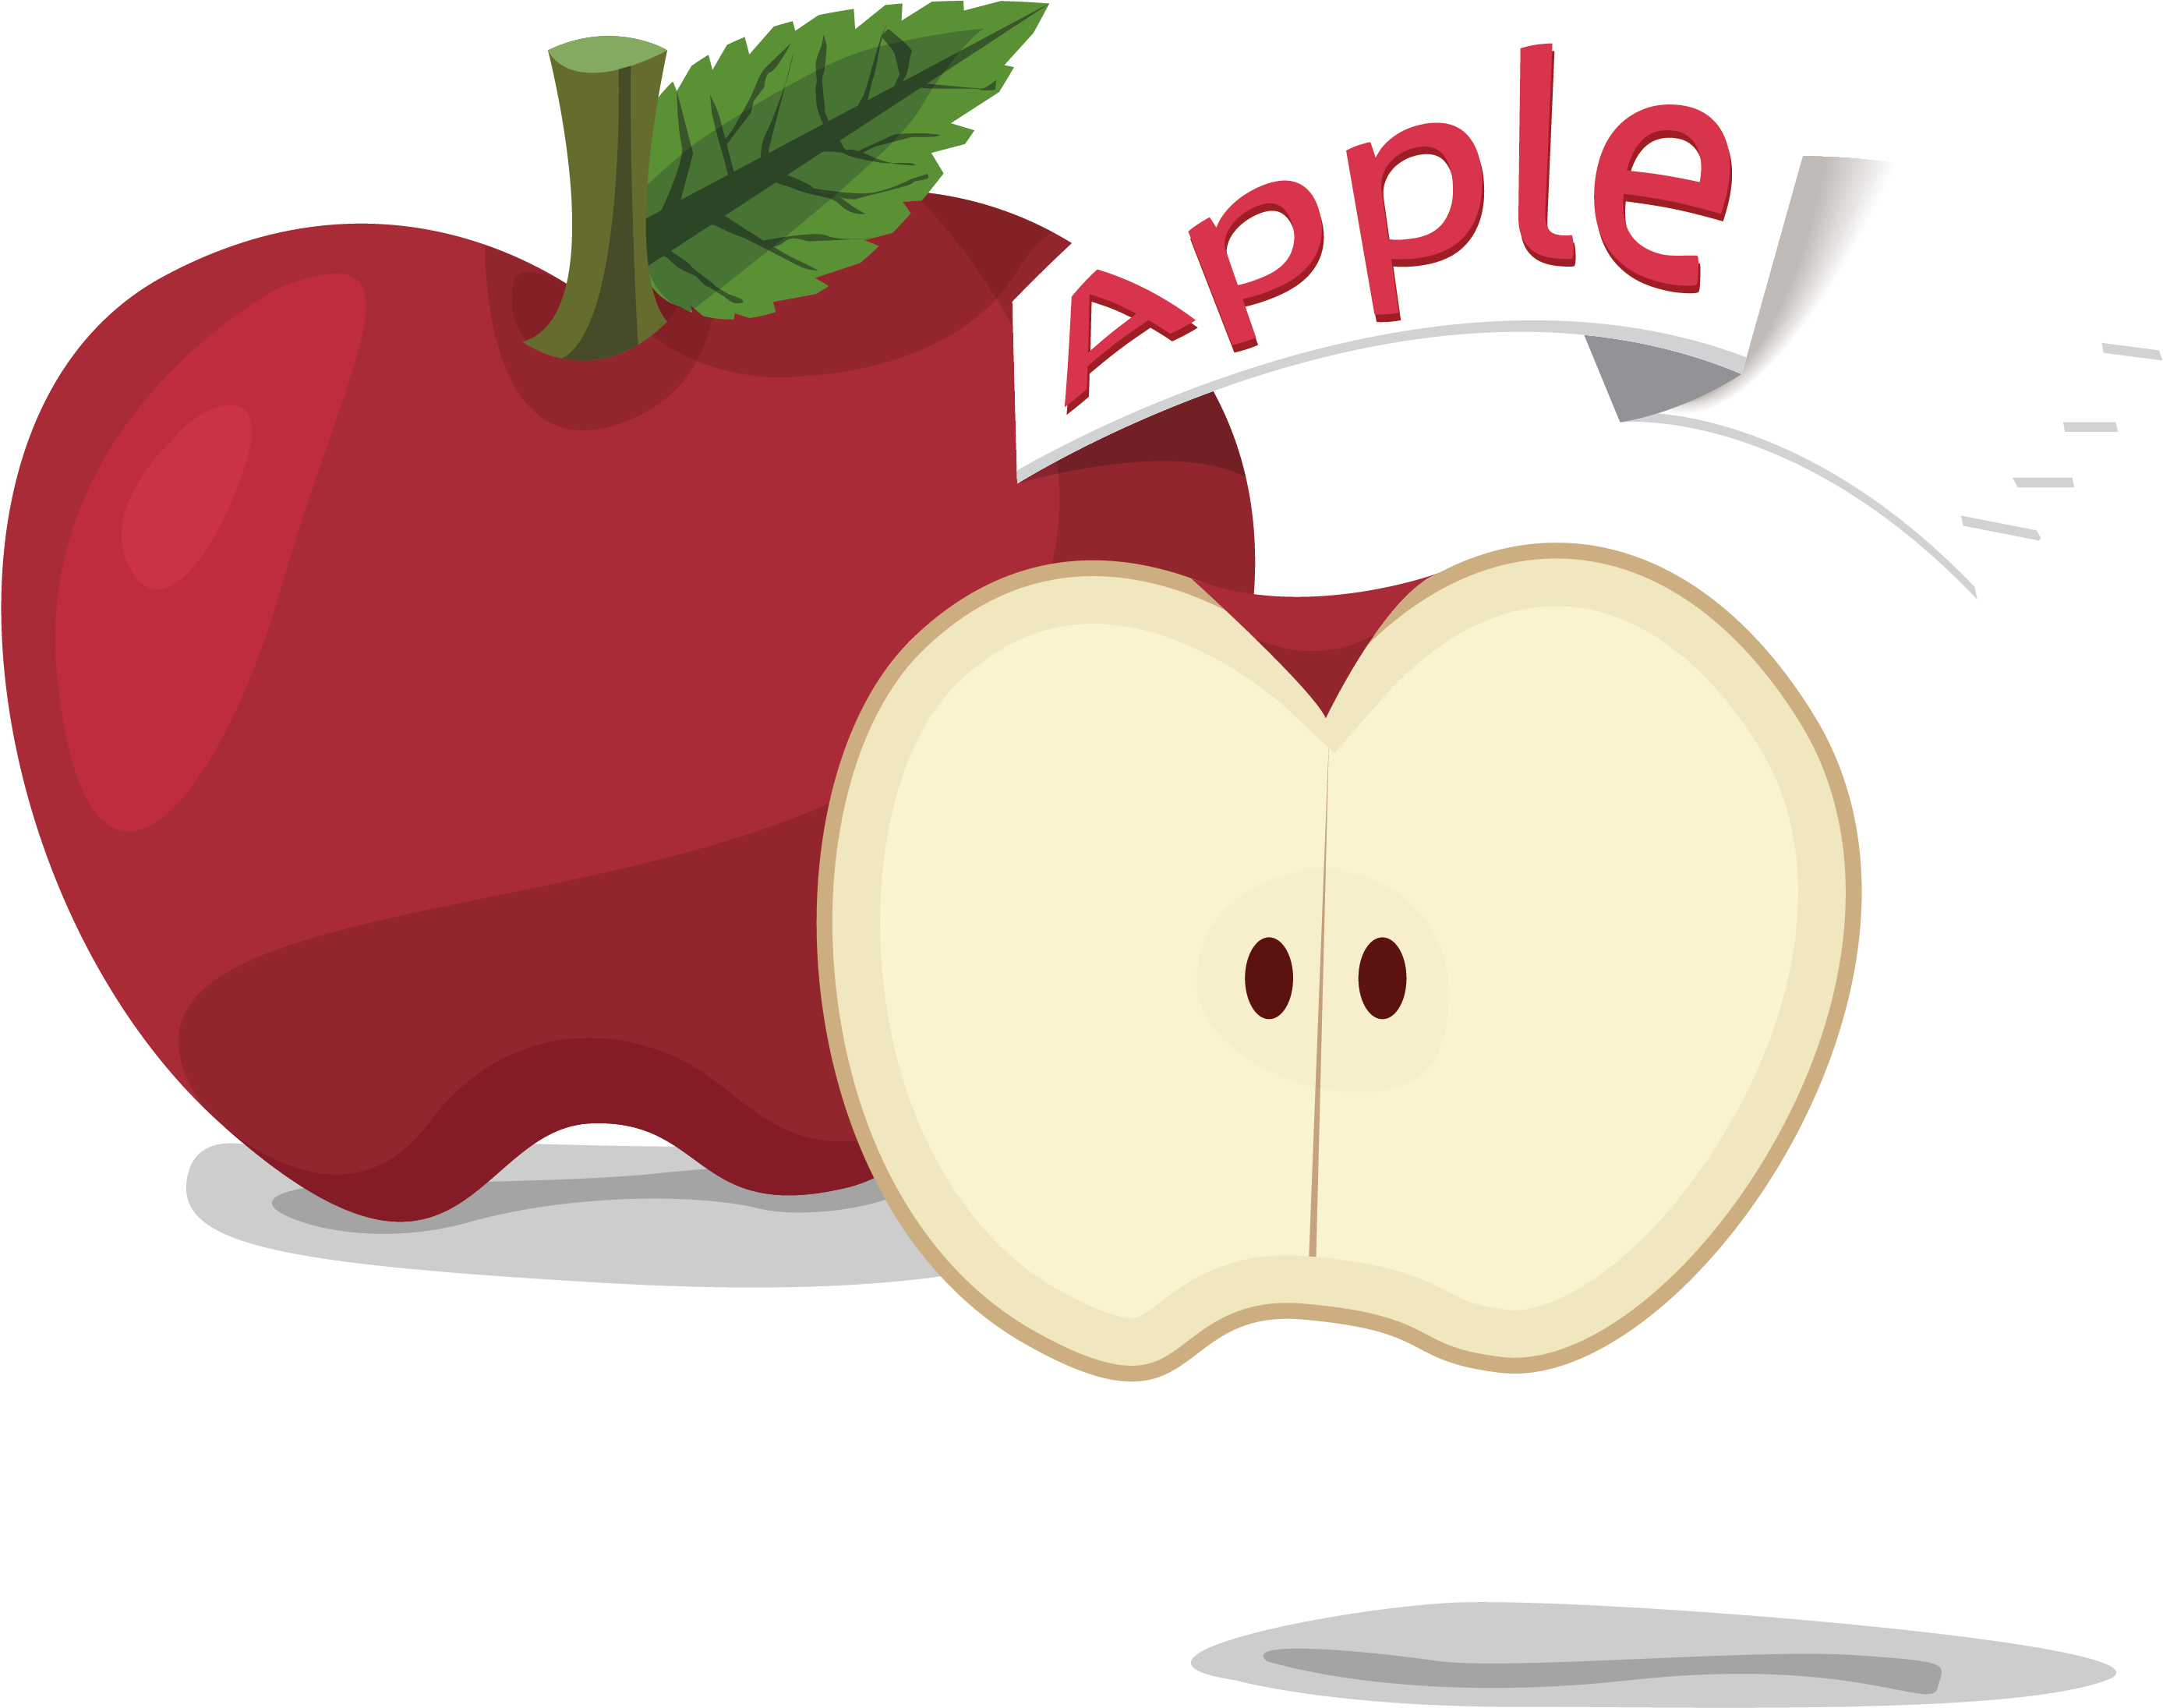 Apple Fruit Cartoon - Apple Fruit Cartoon (2917x2917)